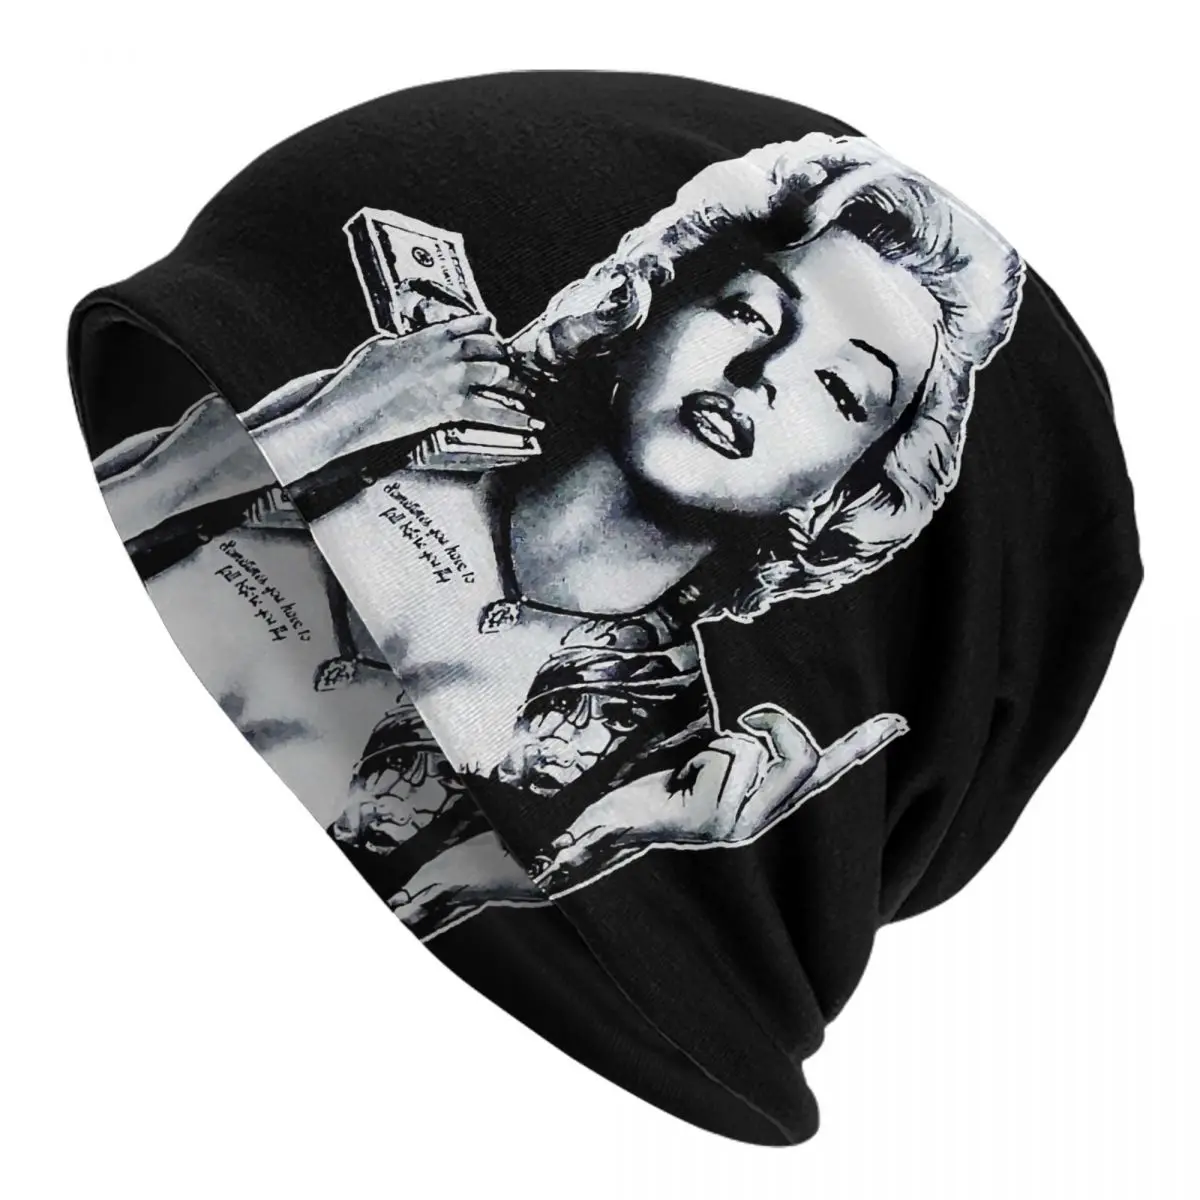 Marilyn Monroe Tequila Money Adult Men's Women's Knit Hat Keep warm winter Funny knitted hat